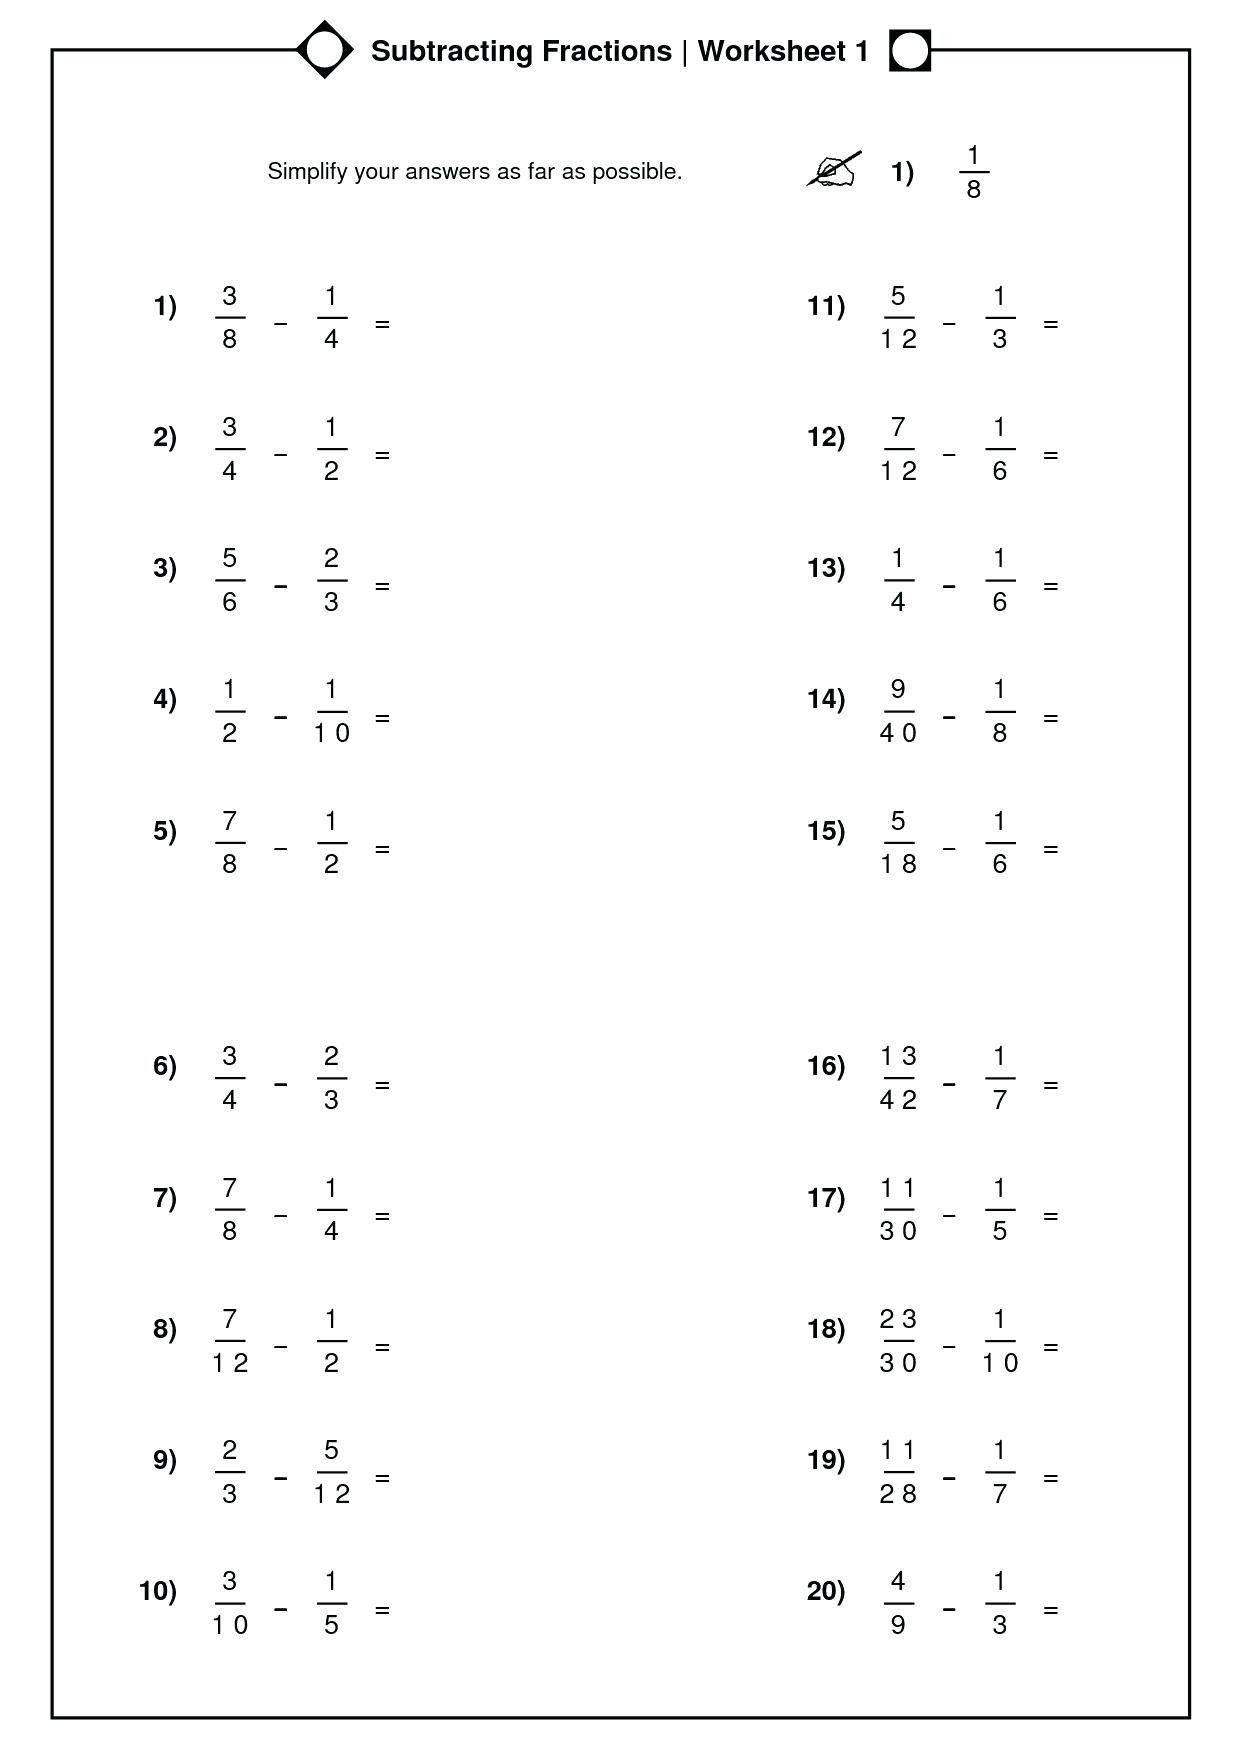 Free Math Worksheets Third Grade 3 Subtraction Subtract Borrow Across 2 Zeros